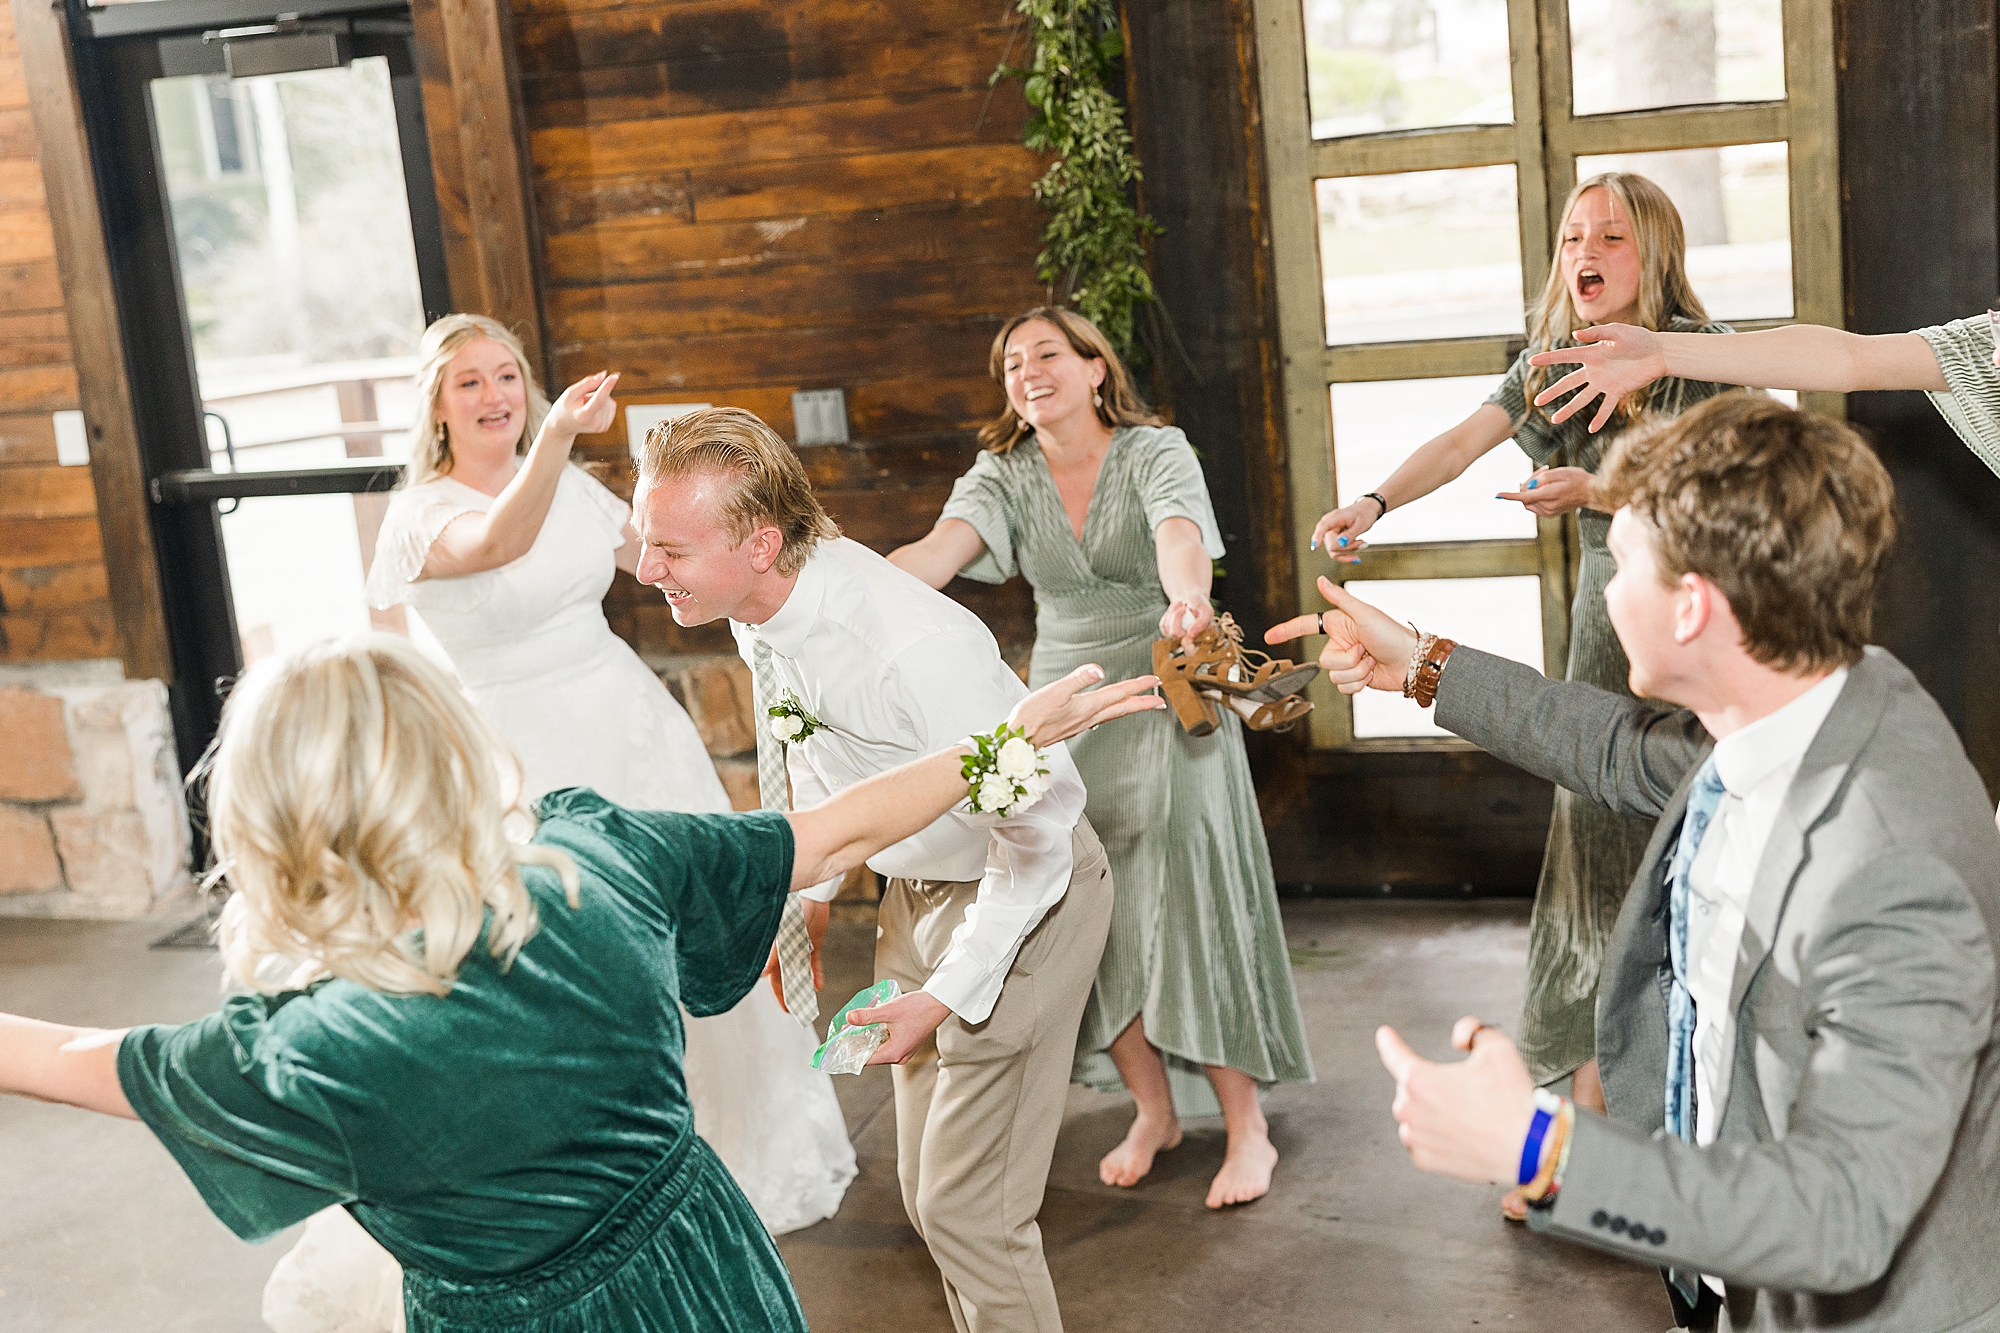 Wedding guests having fun and dancing on the dance floor
